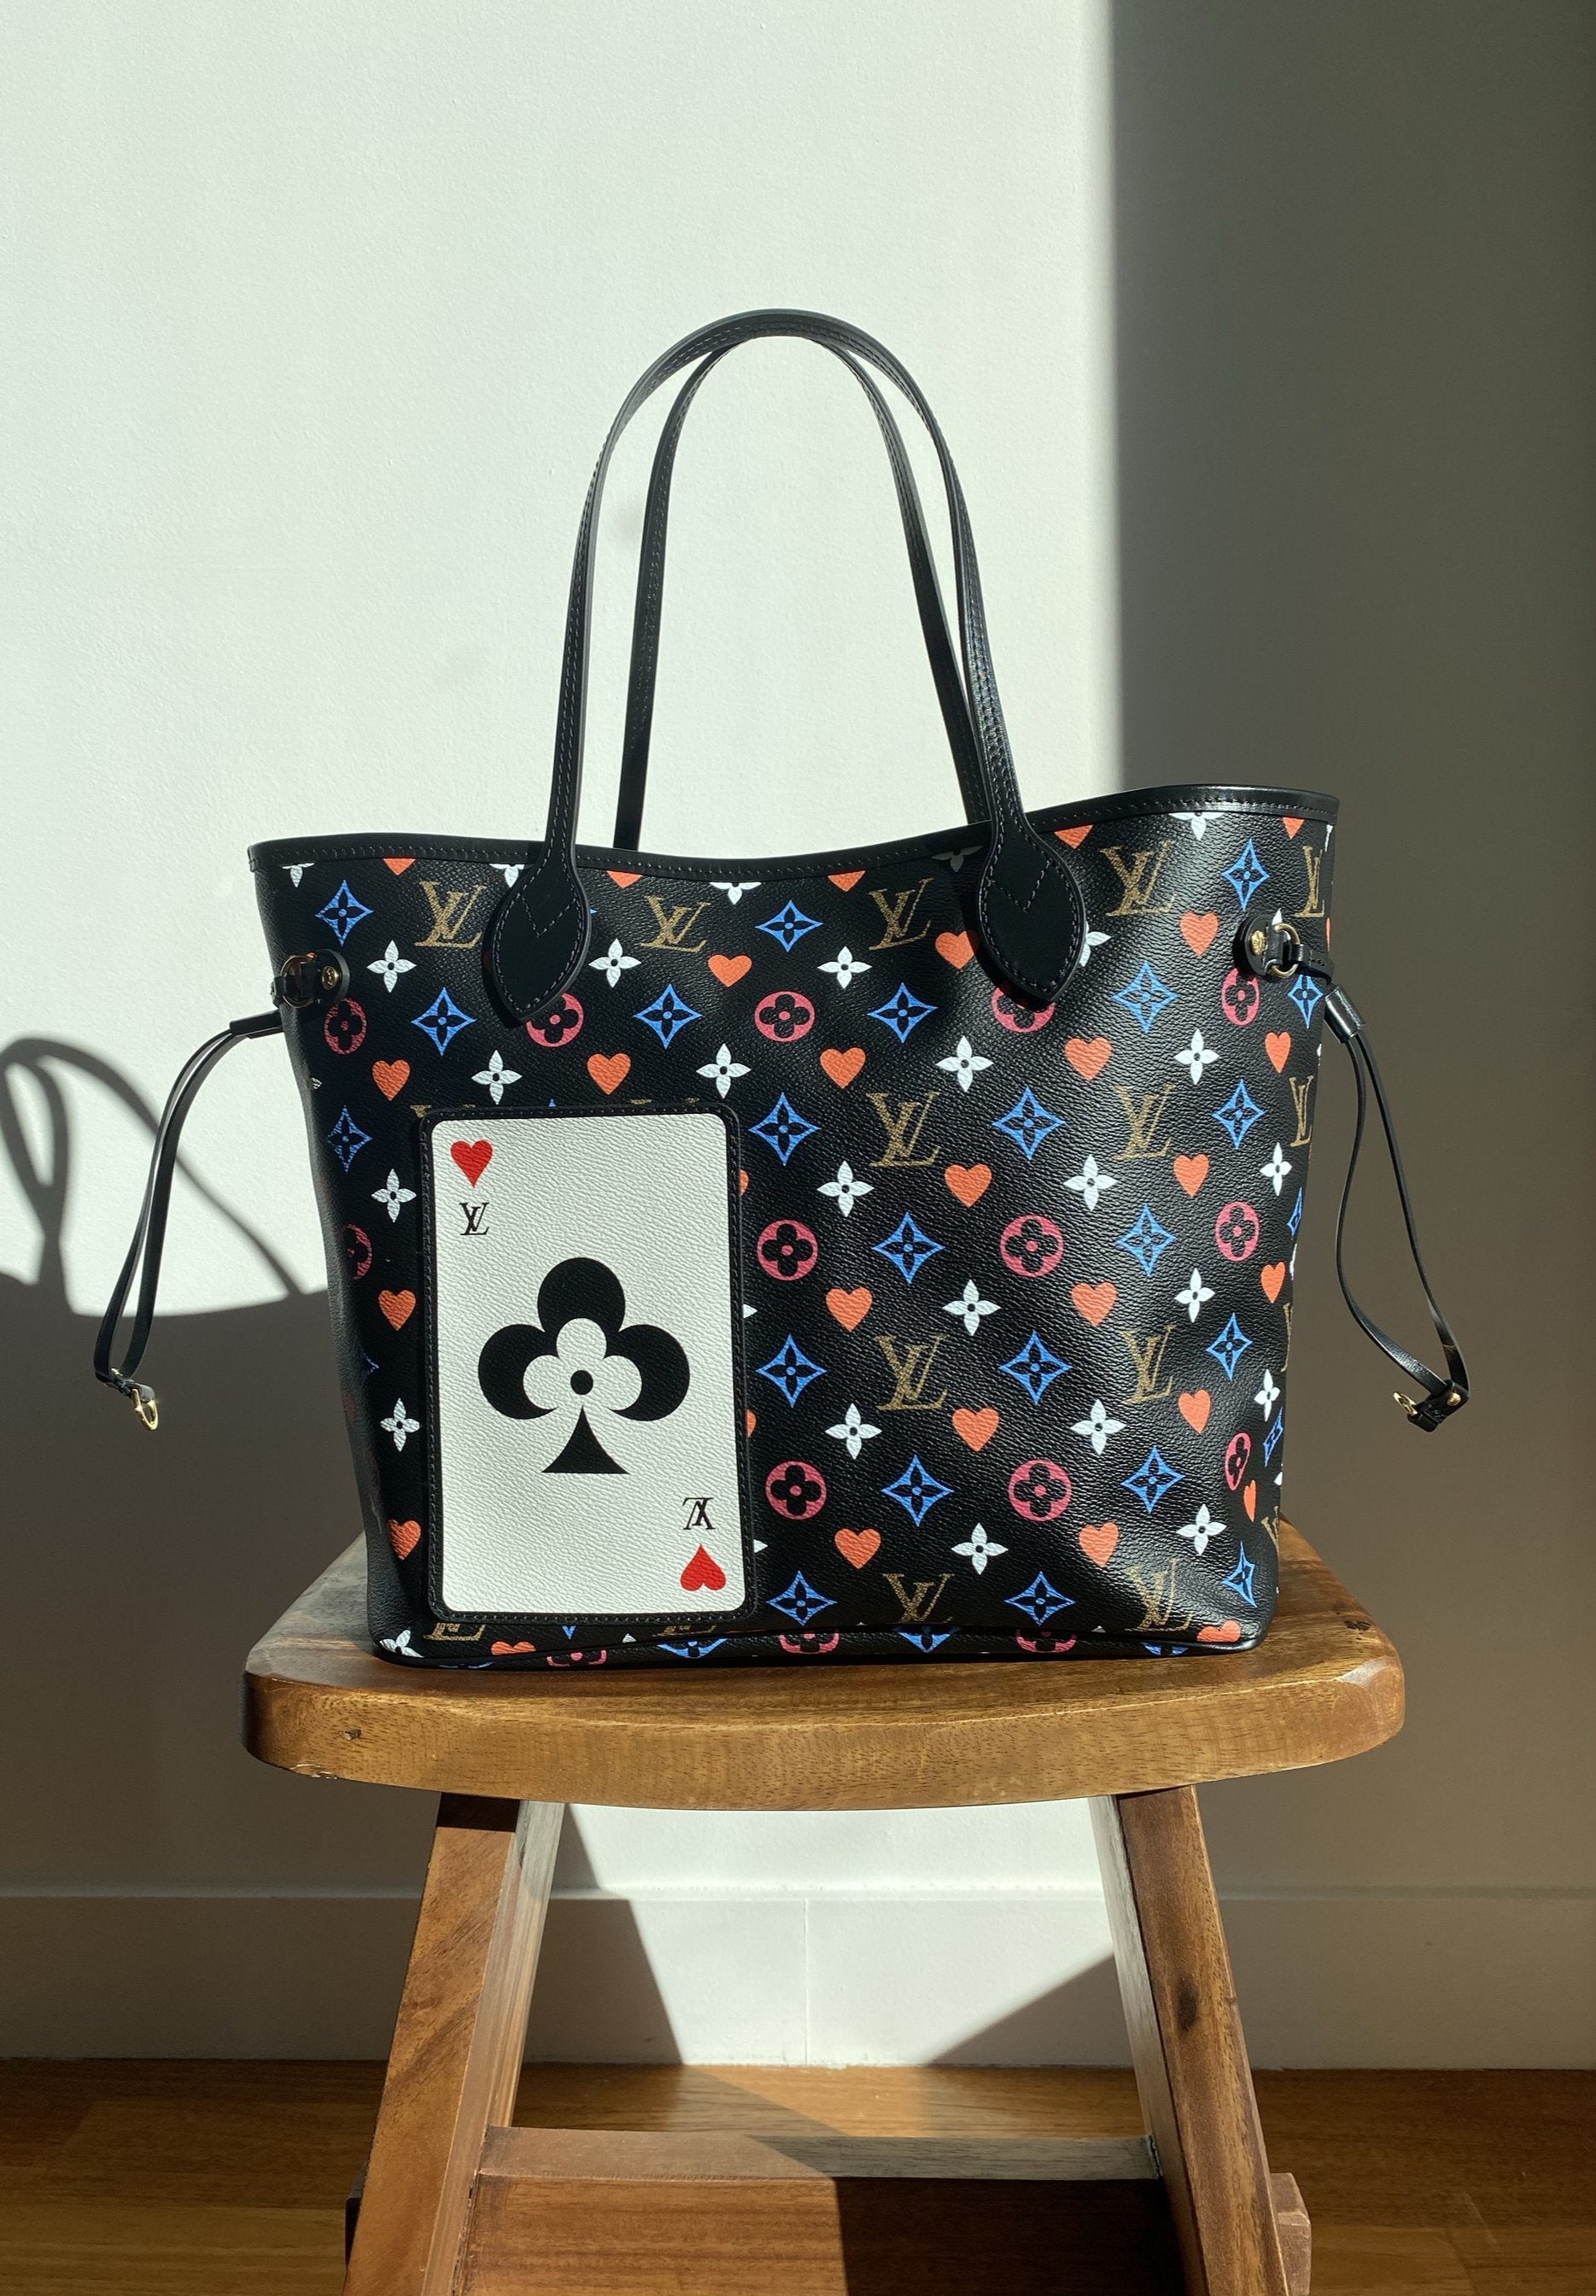 Louis Vuitton Black Multicolor Monogram Canvas Game on Neverfull mm Bag